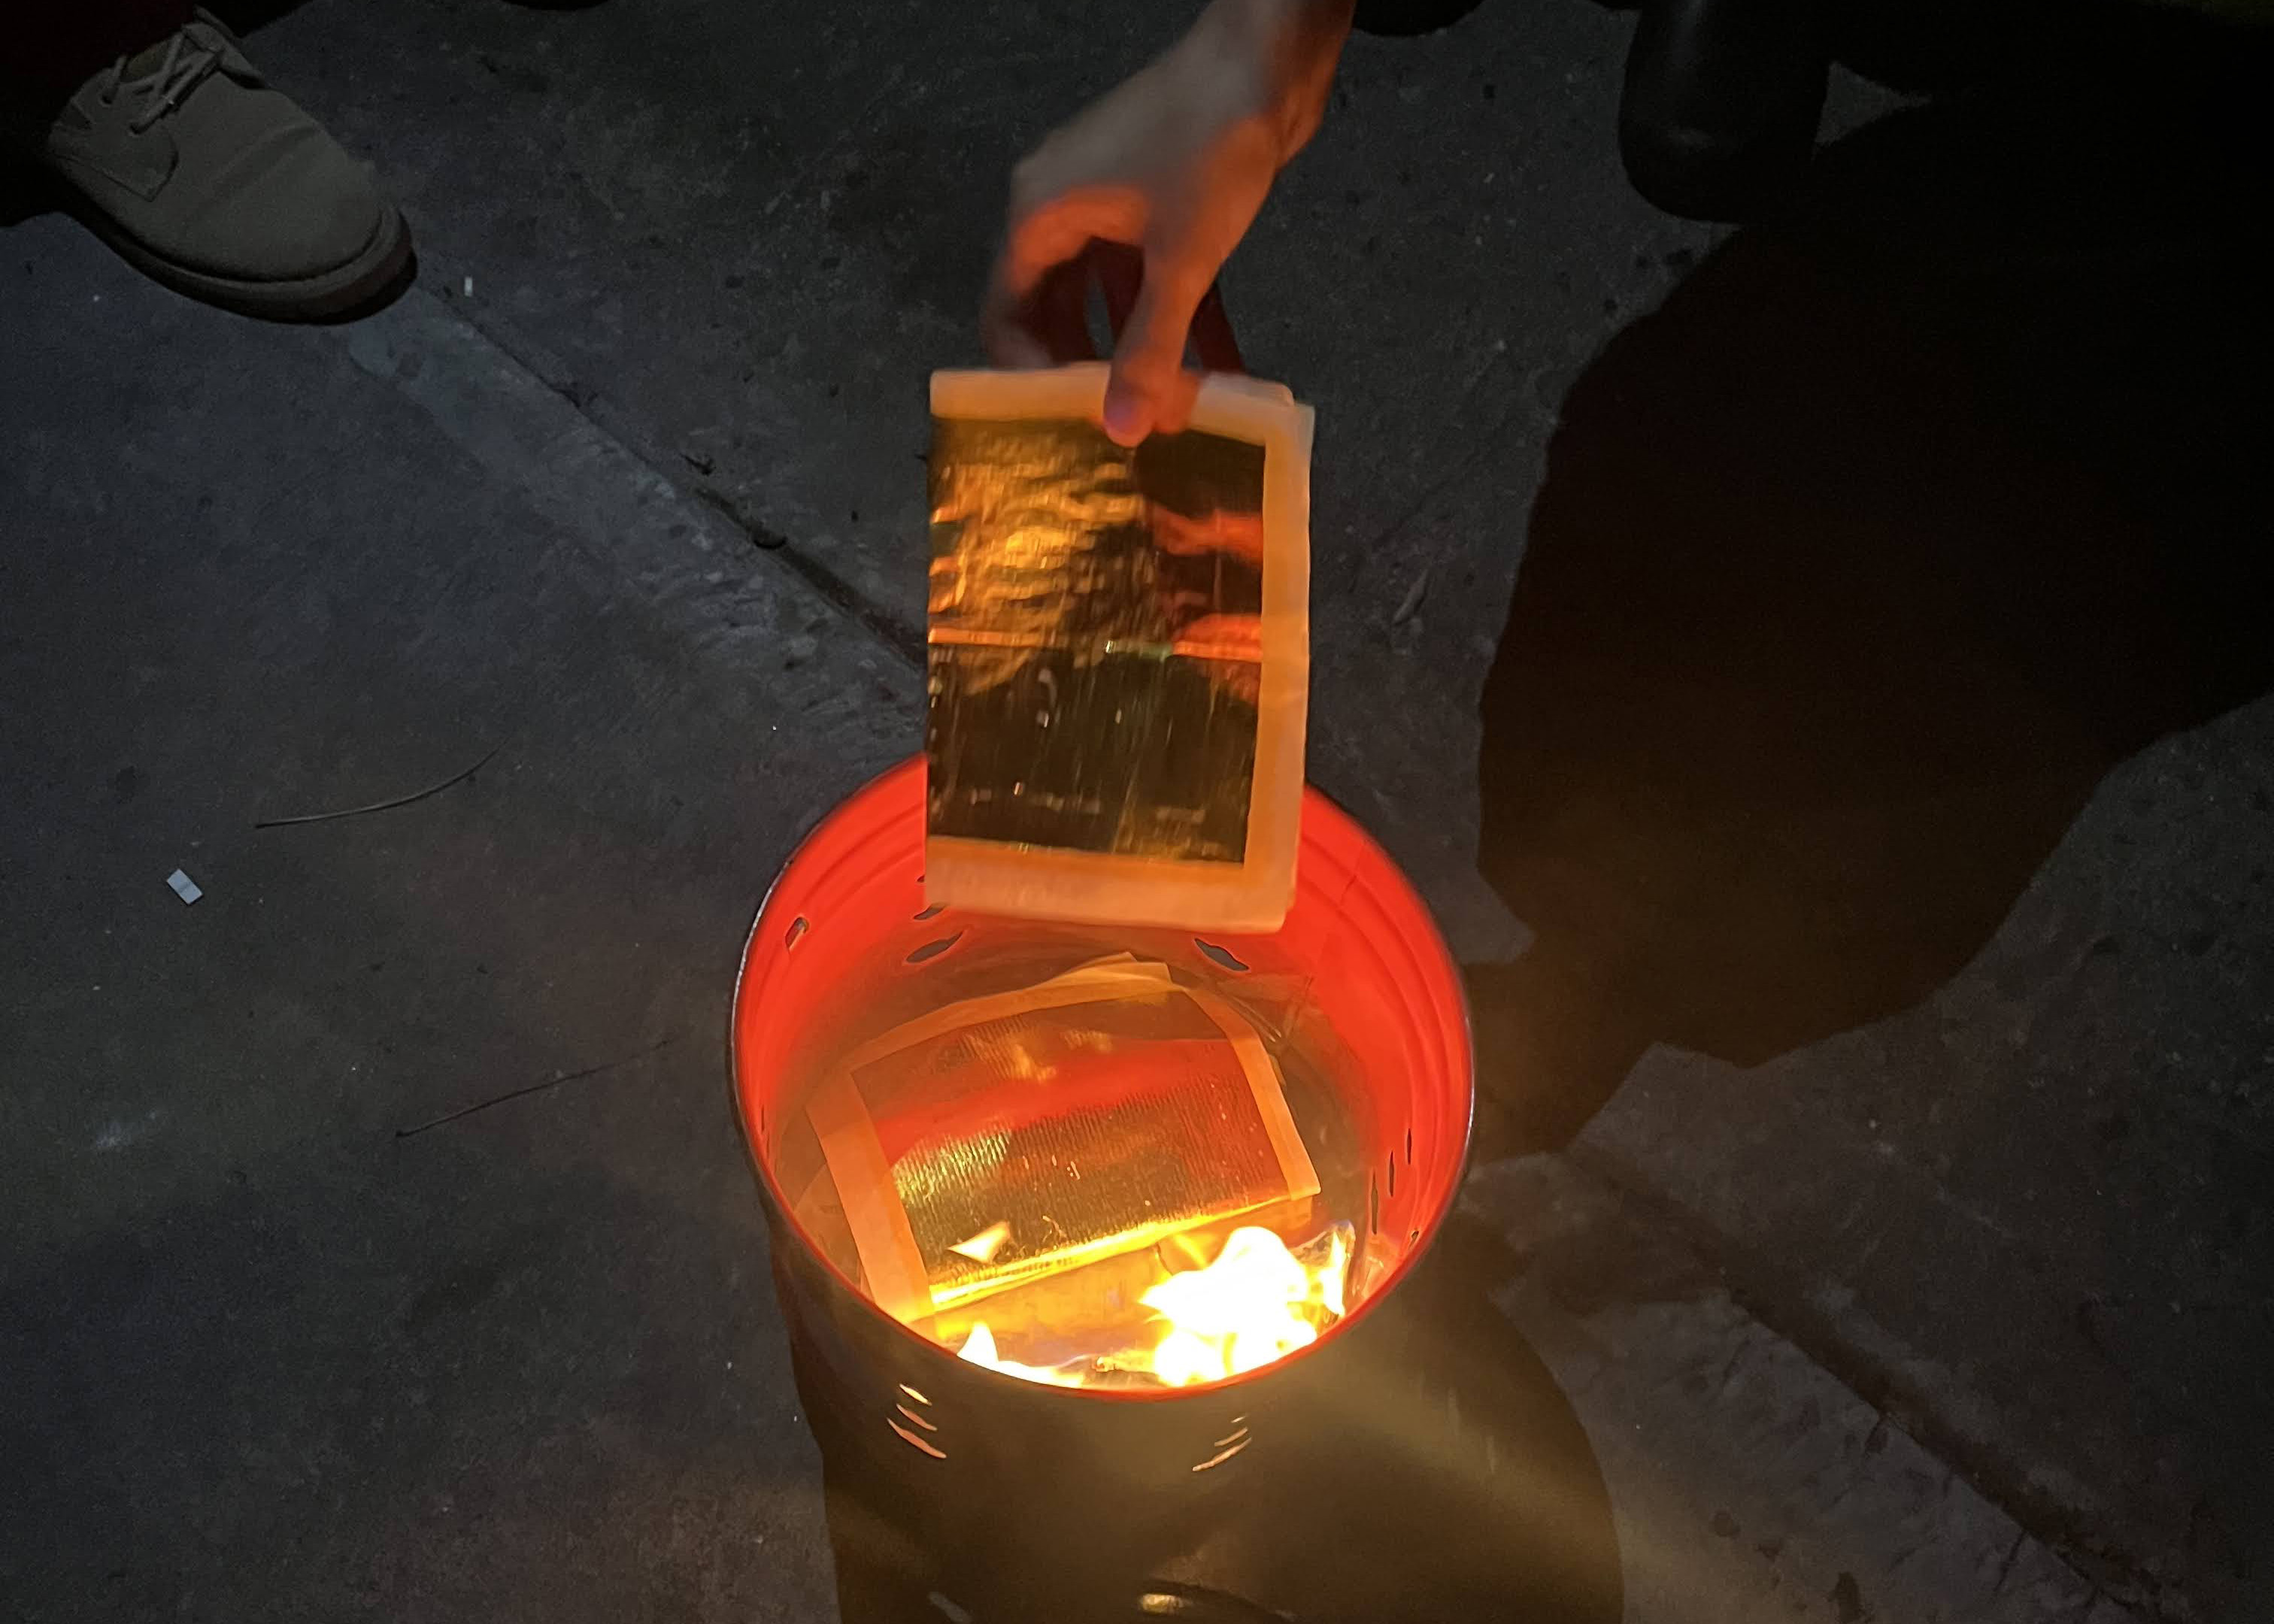 People sending-off their Jiama deities by burning it